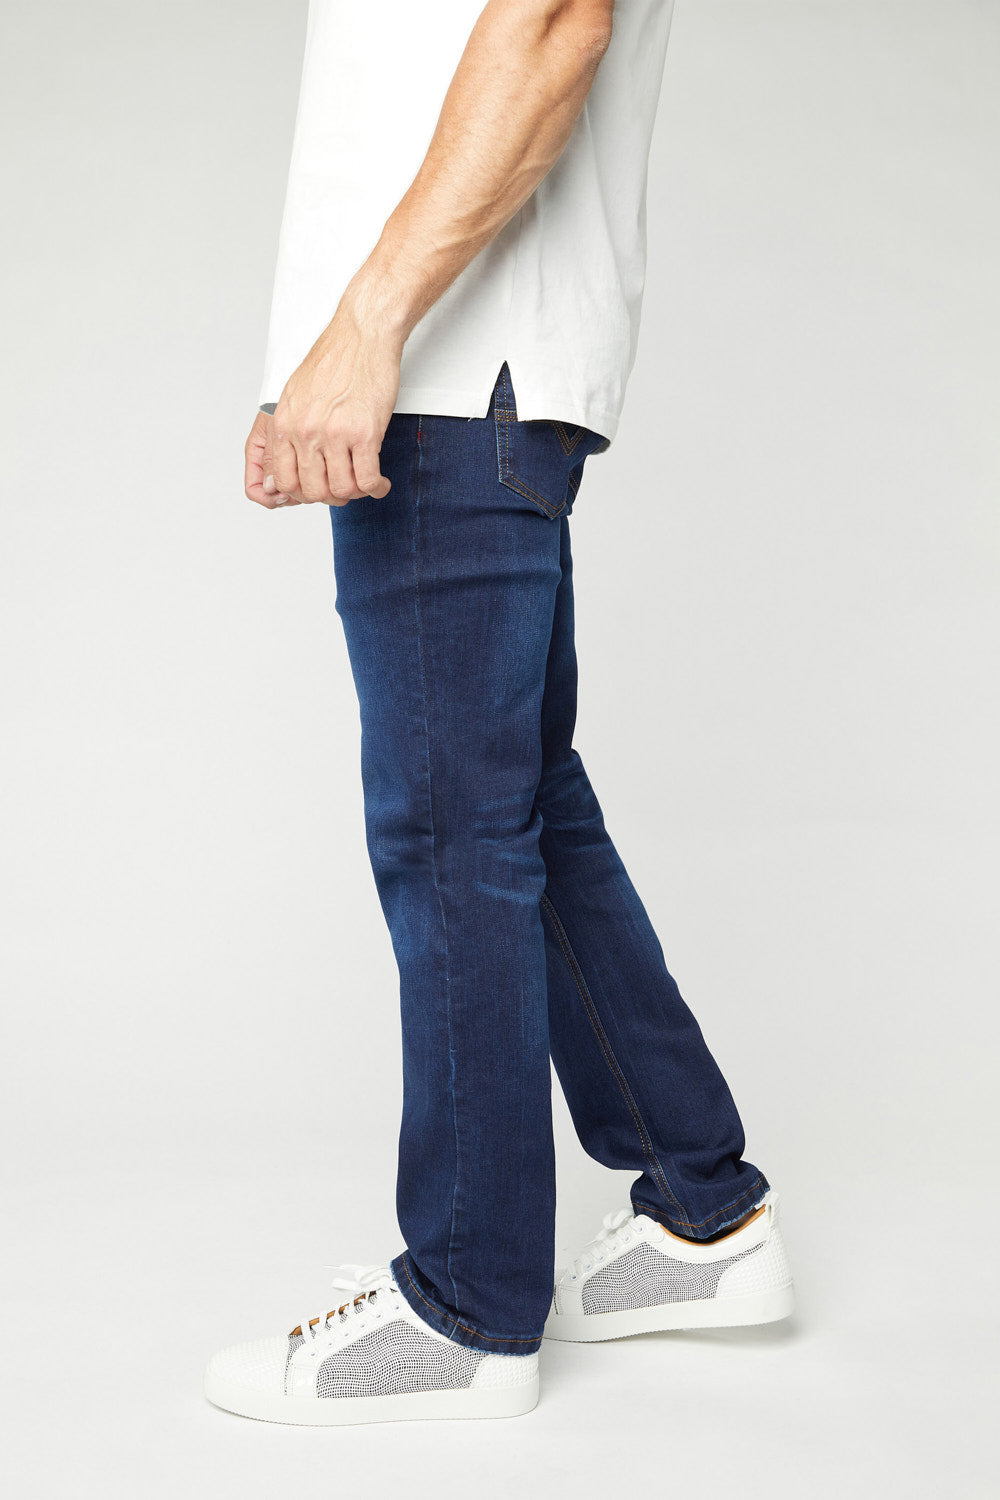 Pax Men's Dk Blue Slim Stretch Jeans